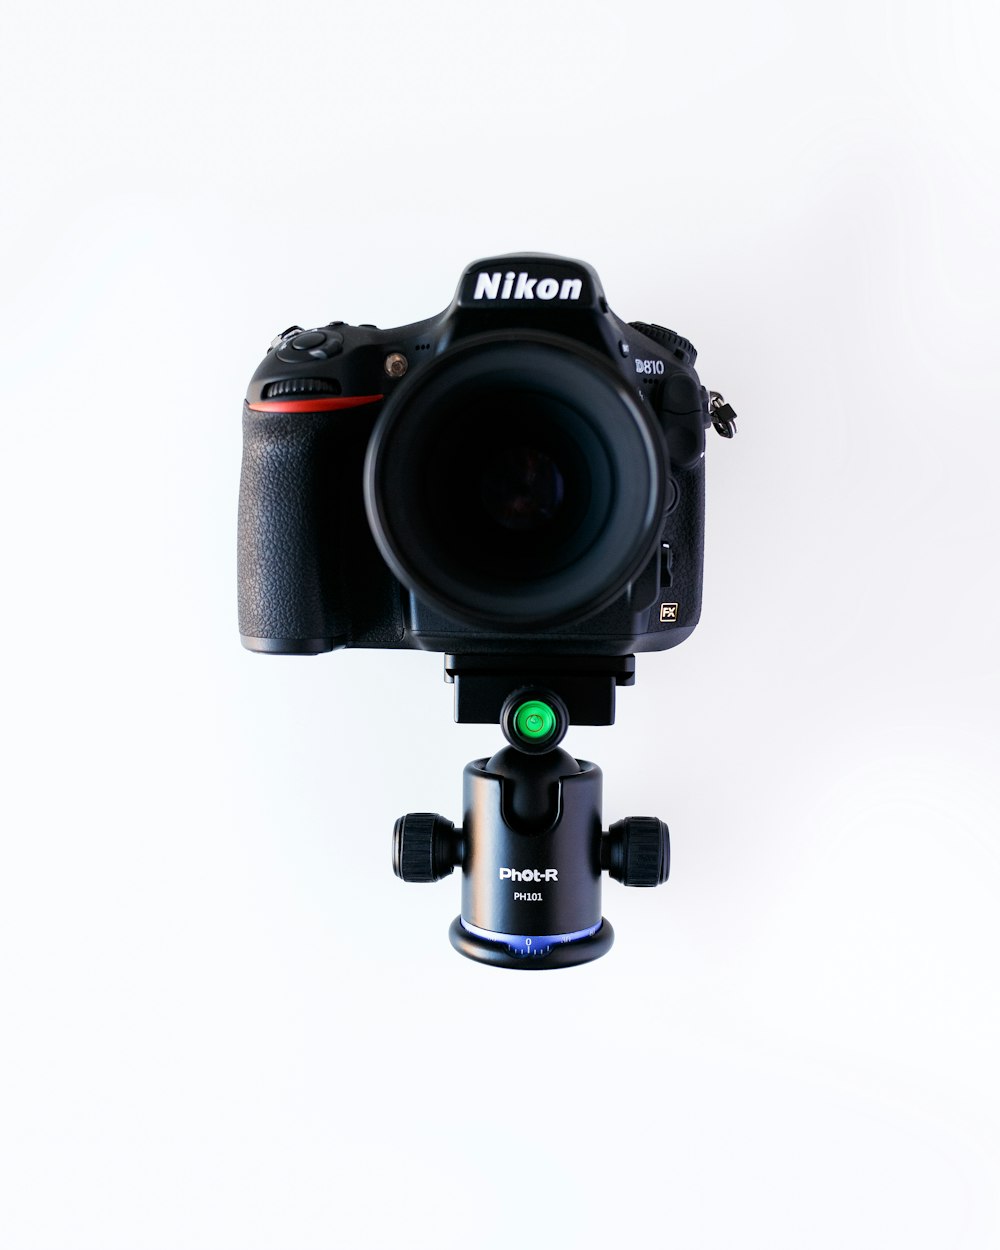 black Nikon DSLR camera with lens